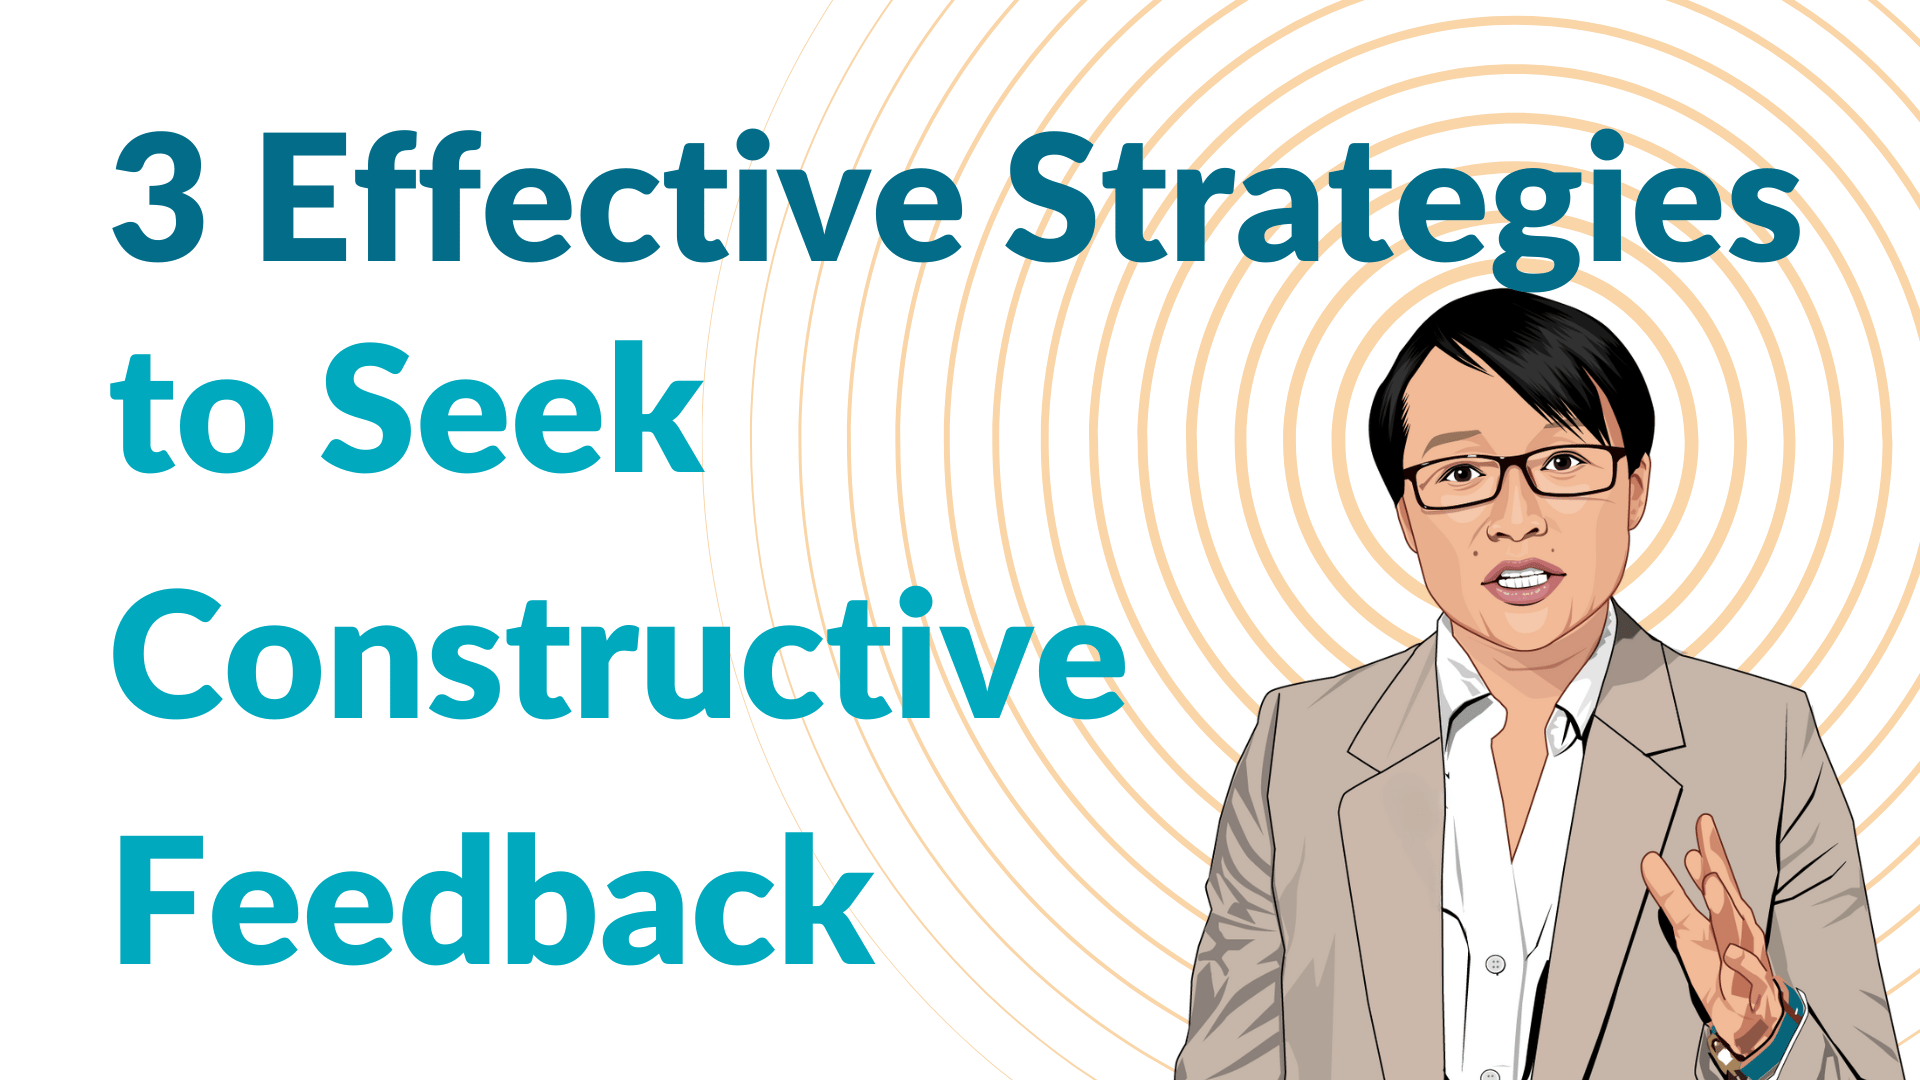 3 Effective Strategies to Seek Constructive Feedback